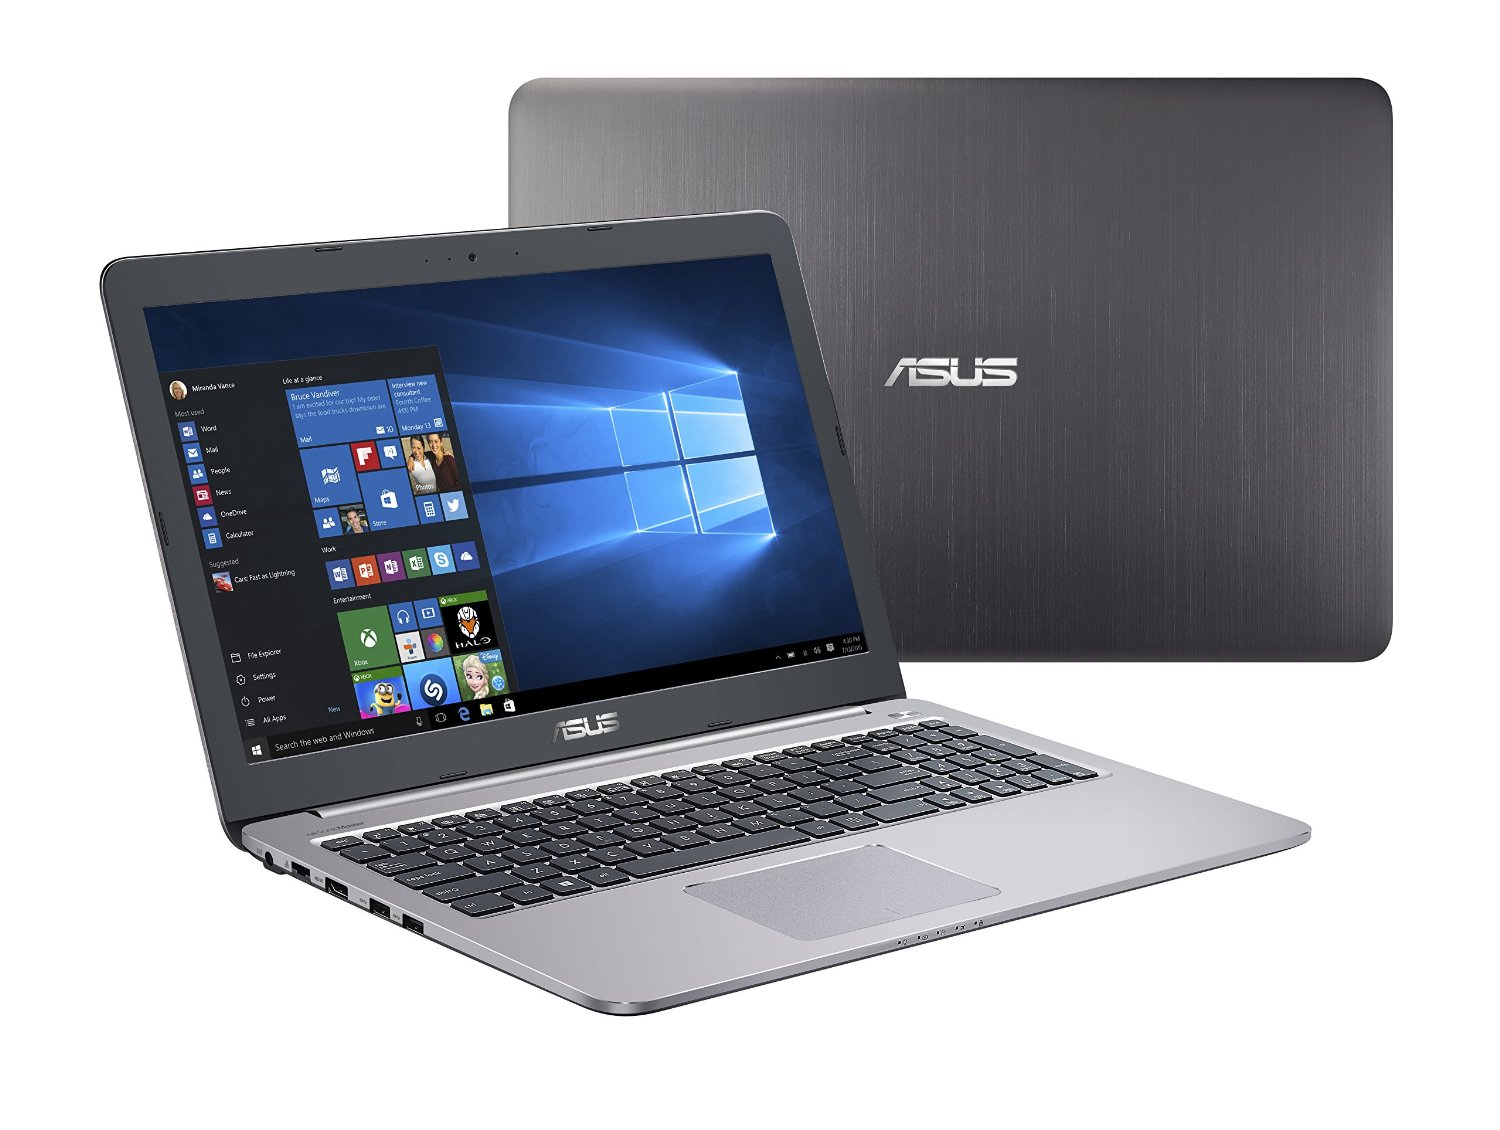 Đánh giá Laptop ASUS K501UX